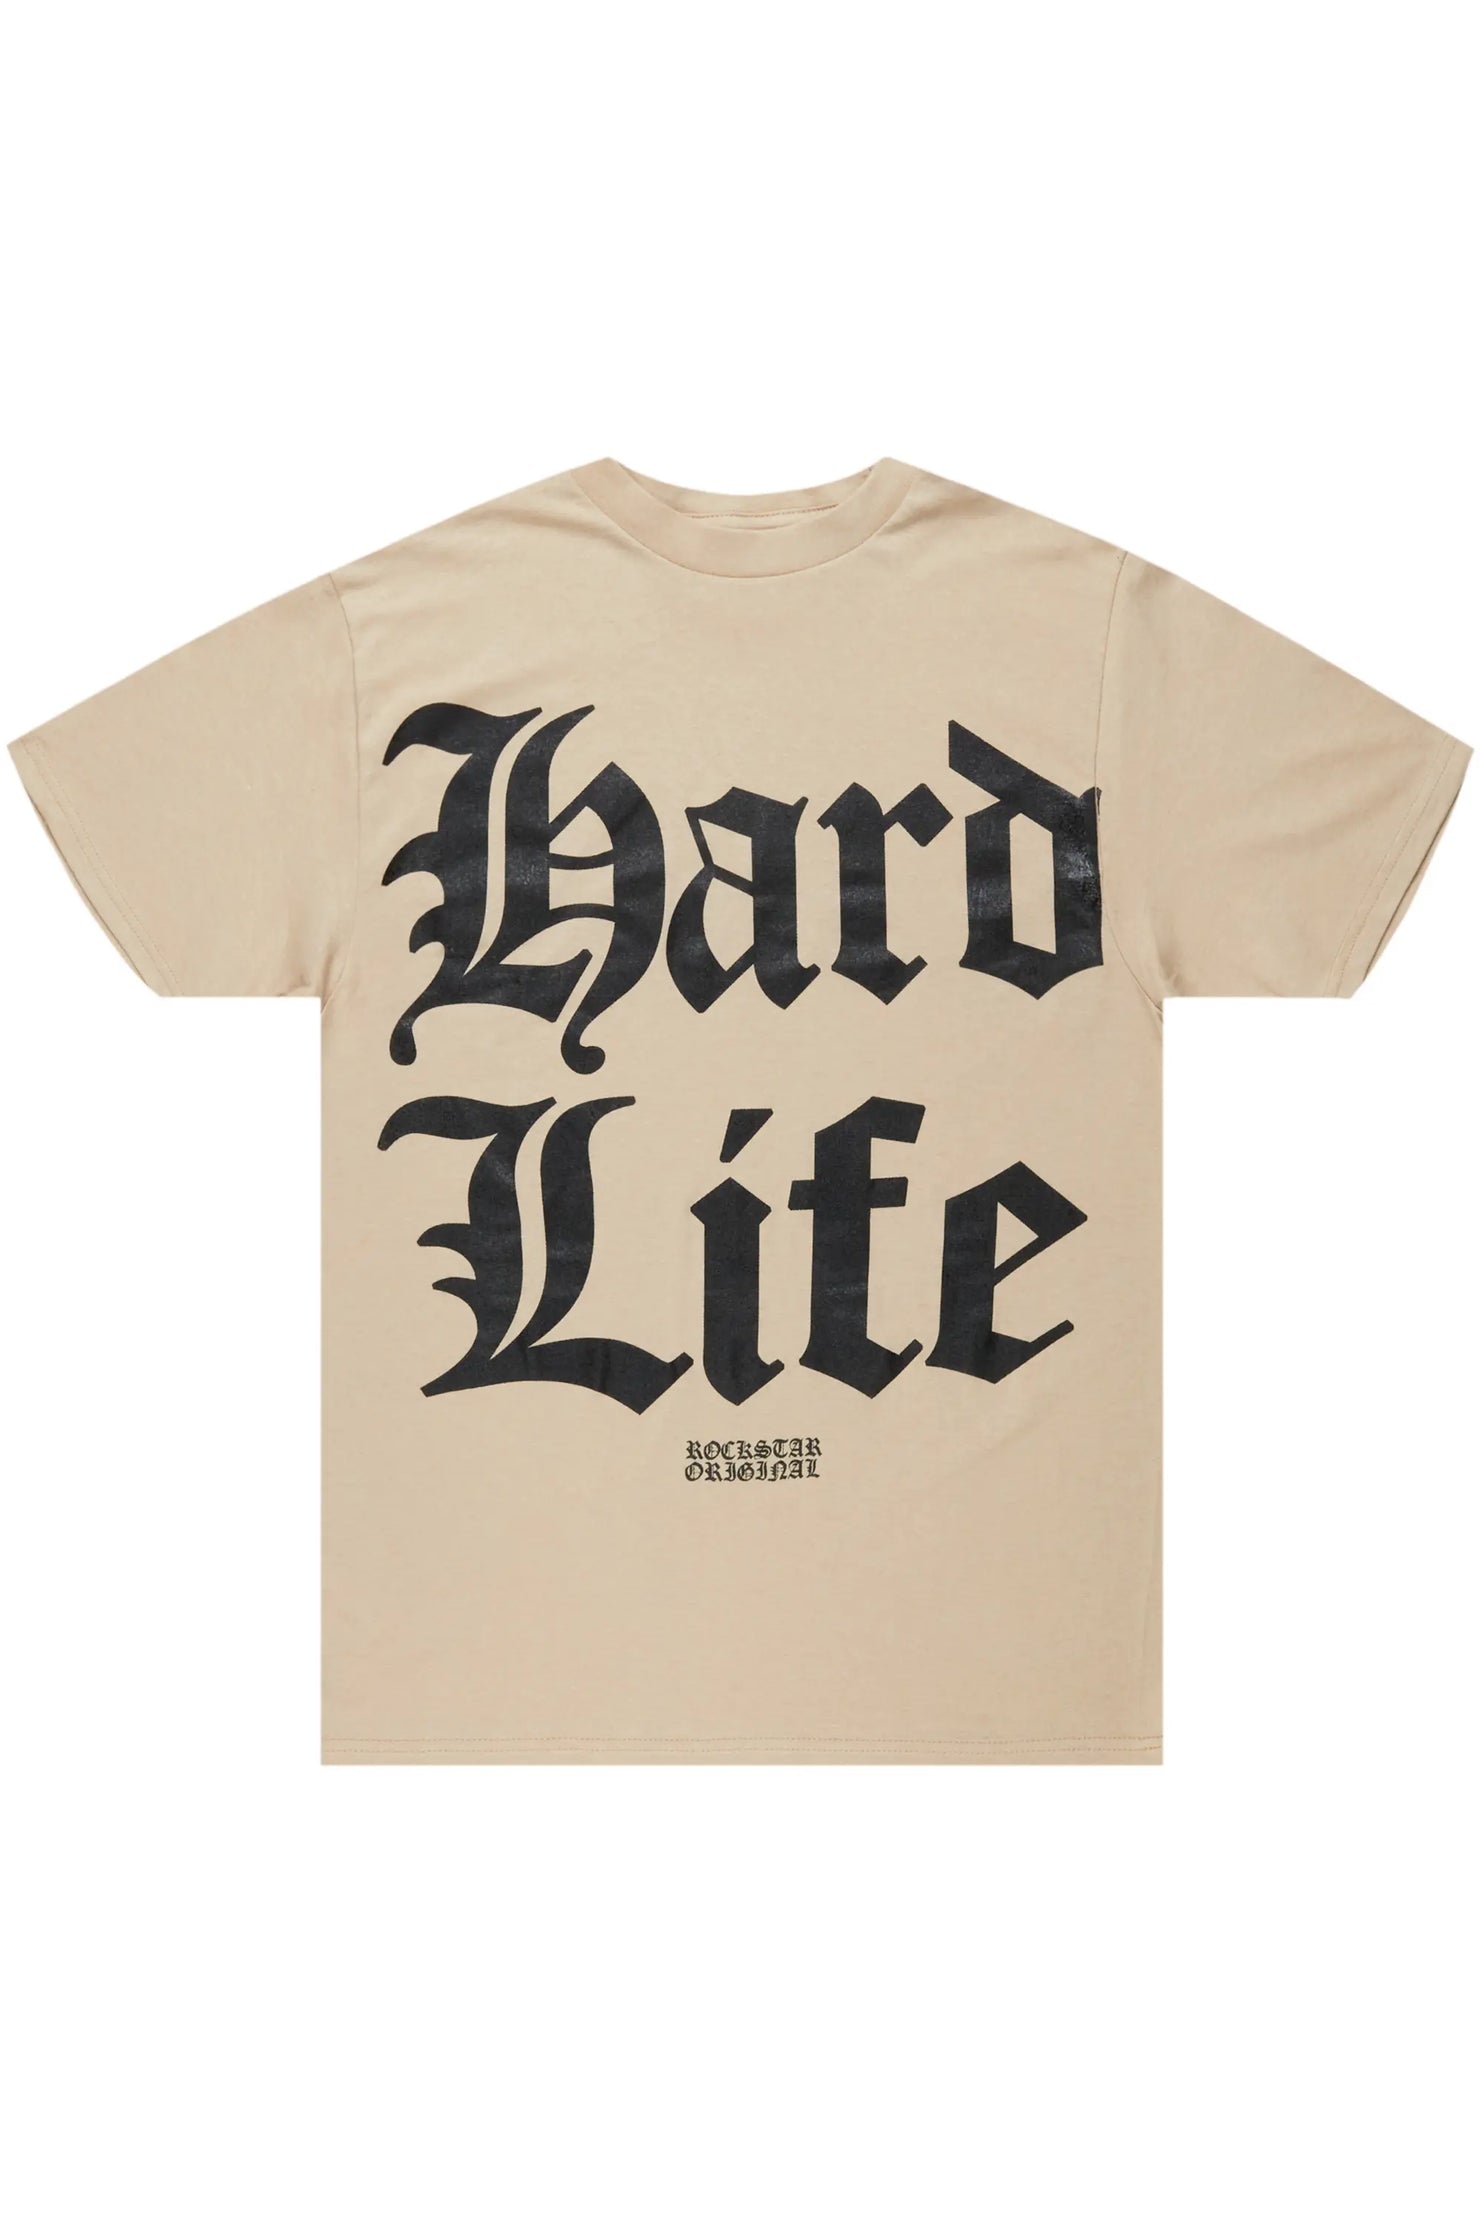 Hard Life Beige Graphic T-Shirt